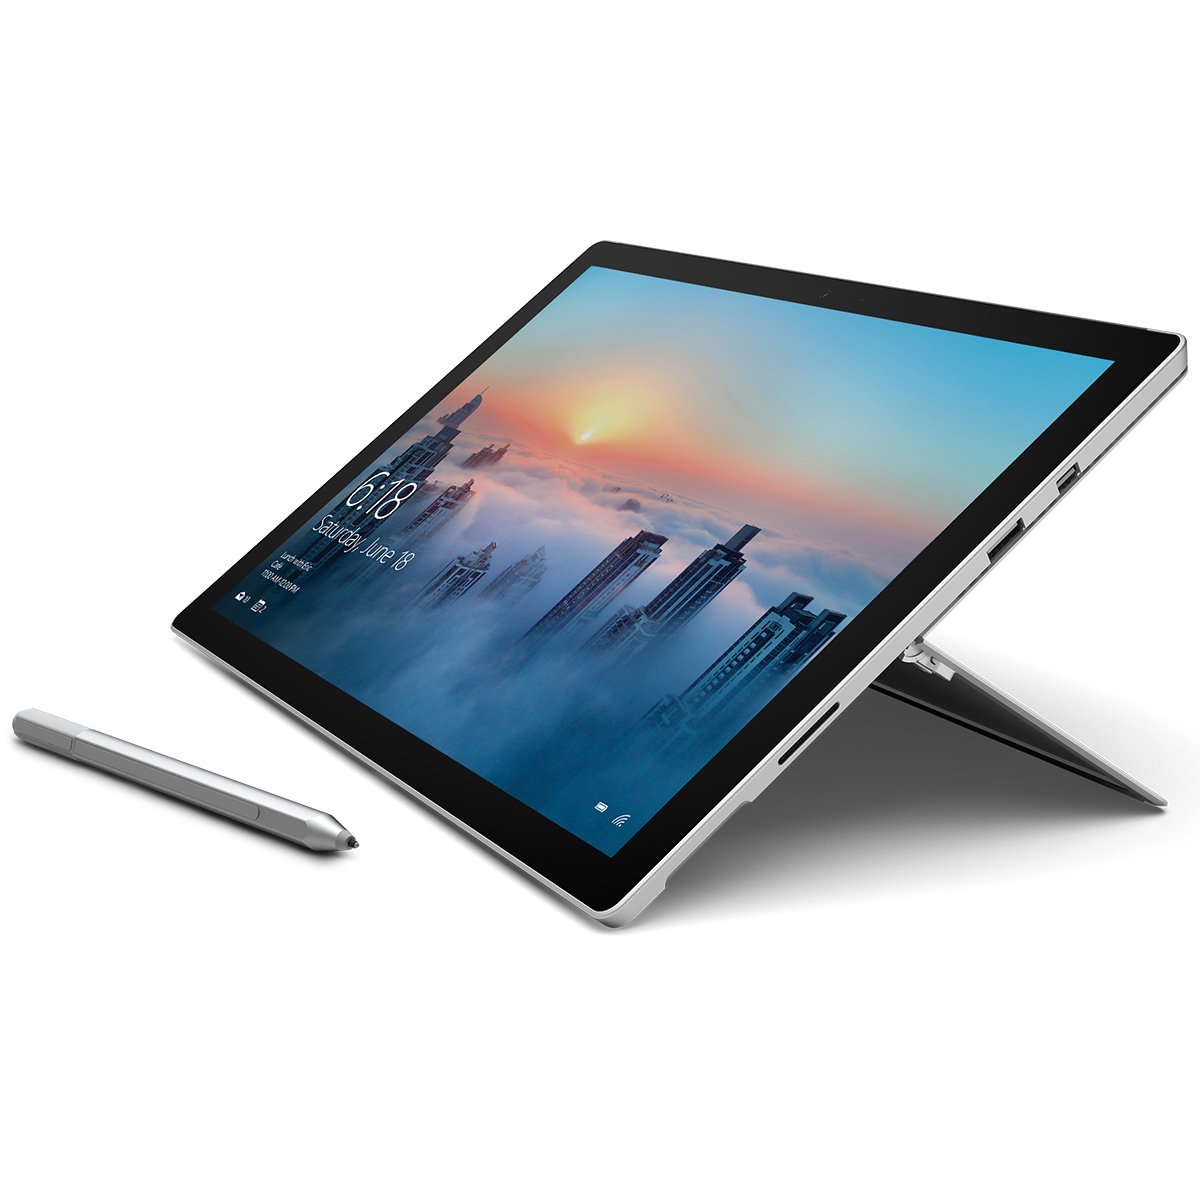 Microsoft Surface Pro 4 (Intel Core i7, 16GB RAM, 1TB) with Windows 10 Anniversary (Renewed)